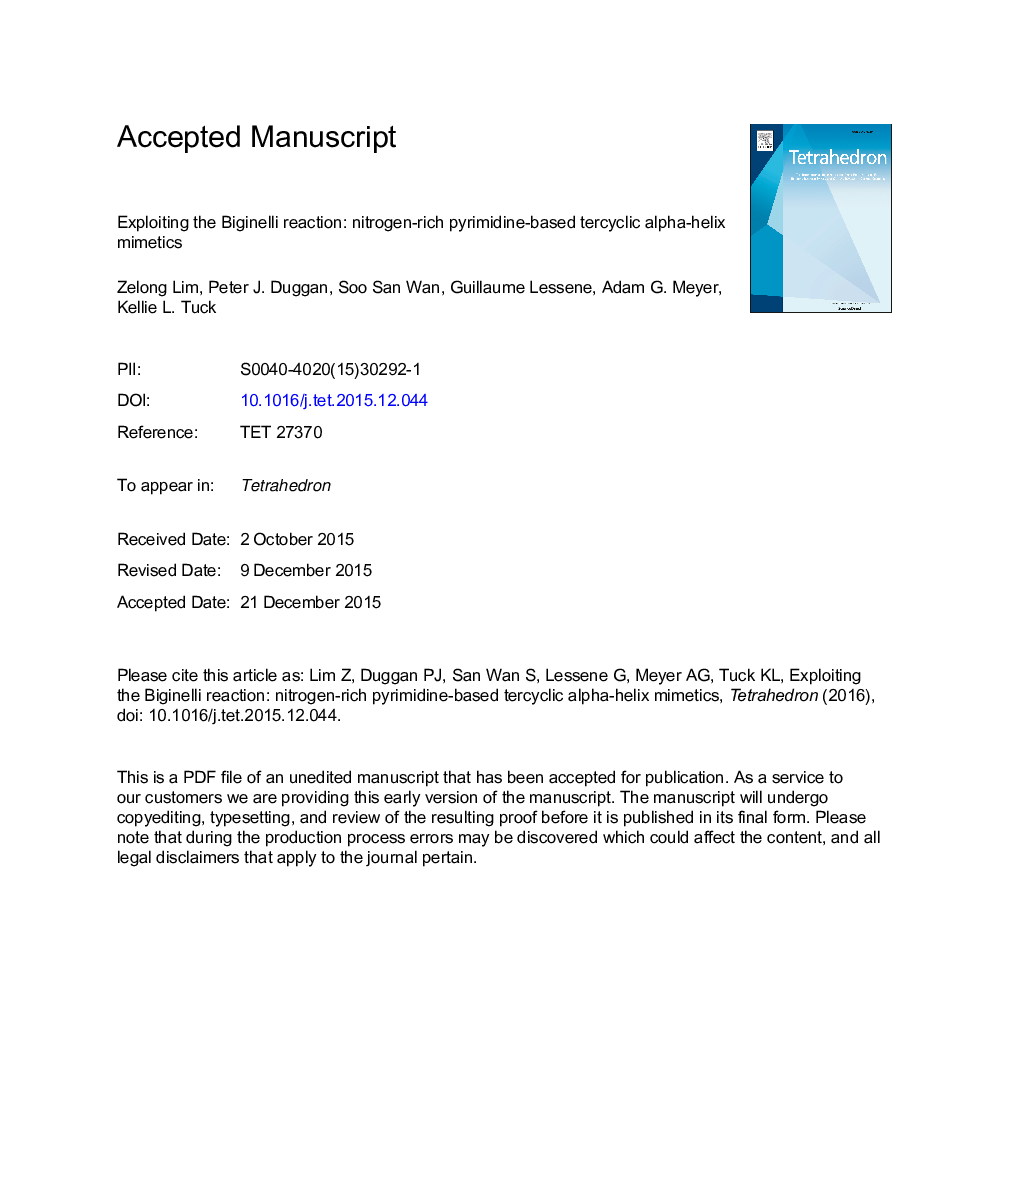 Exploiting the Biginelli reaction: nitrogen-rich pyrimidine-based tercyclic Î±-helix mimetics